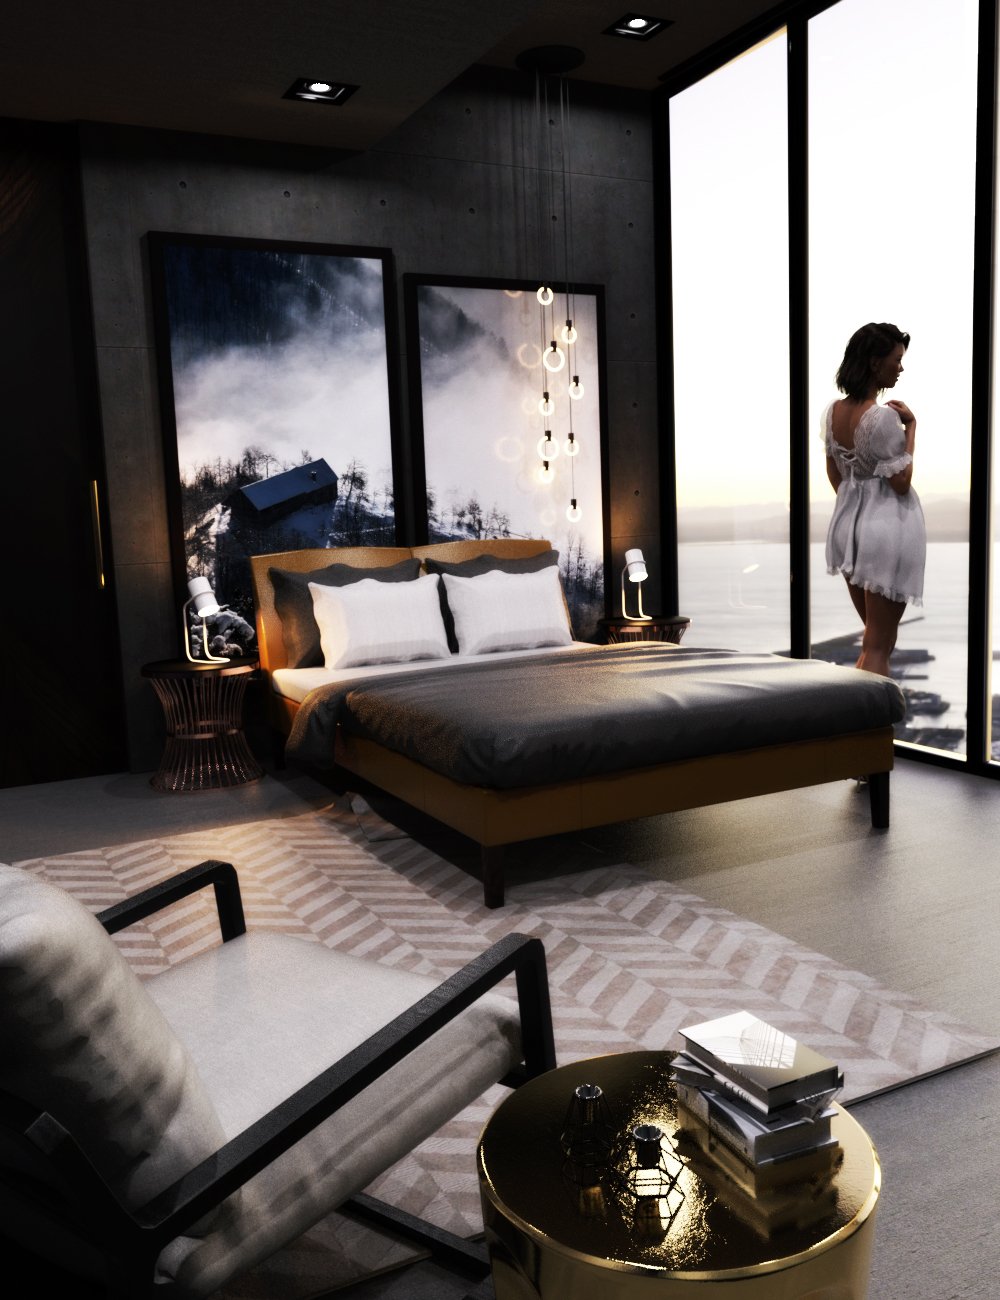 Stylish Bedroom by: Modu8, 3D Models by Daz 3D